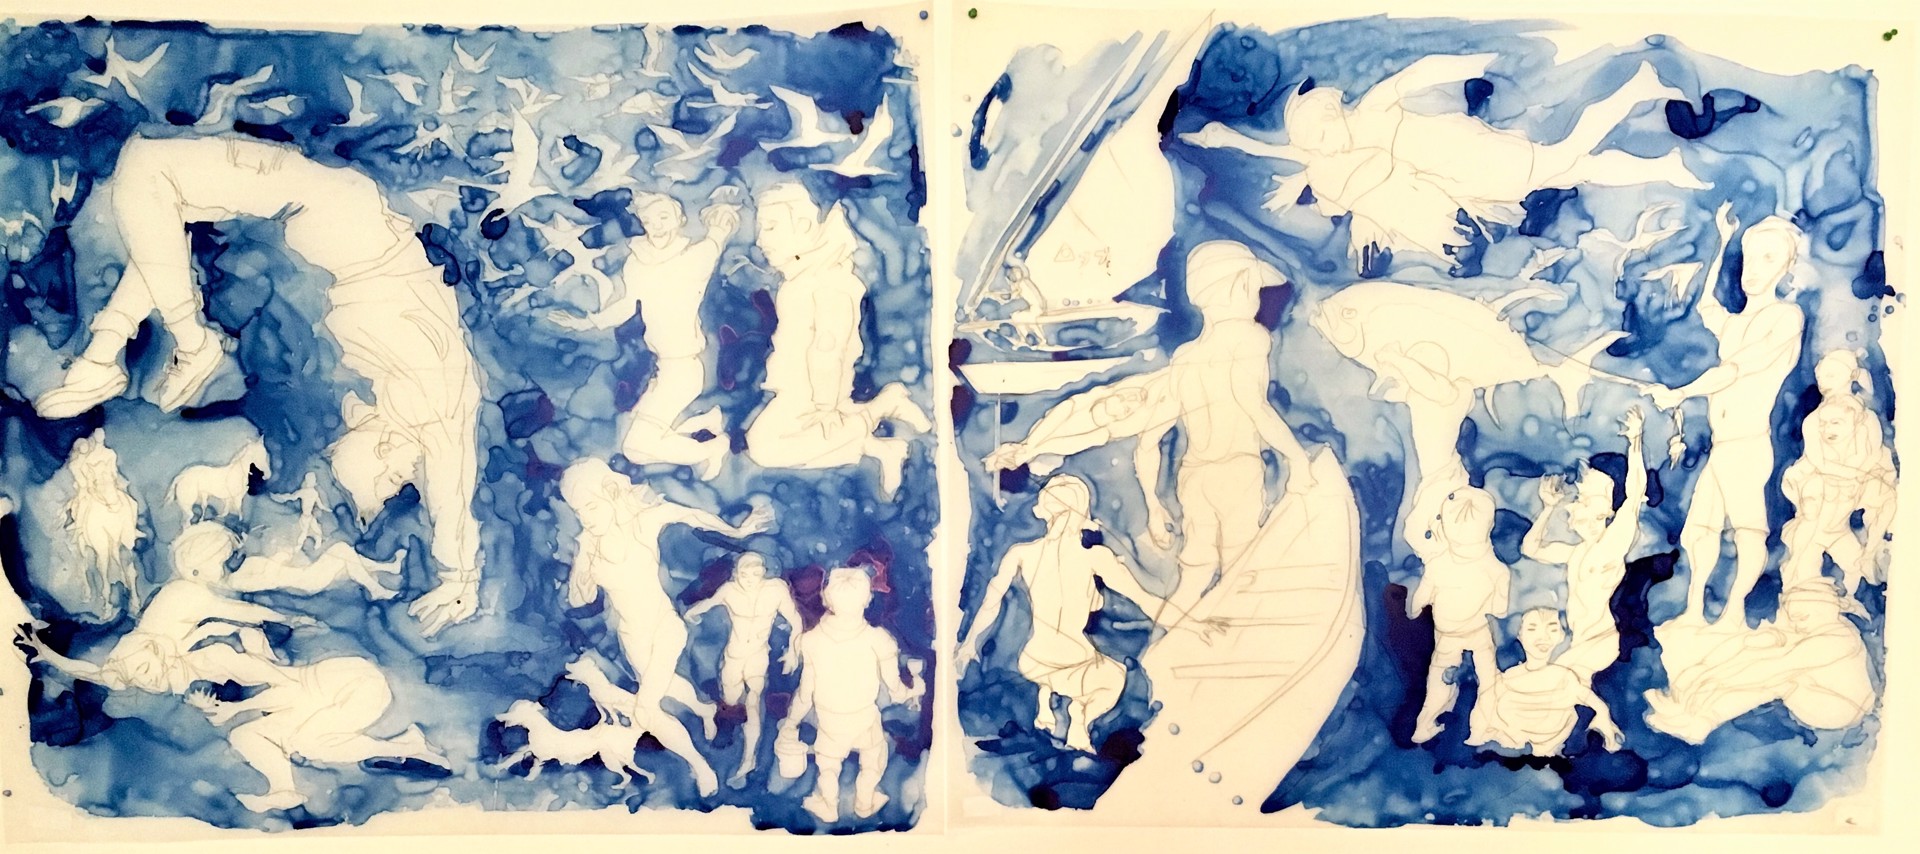 Blue Figures by Mark Adams